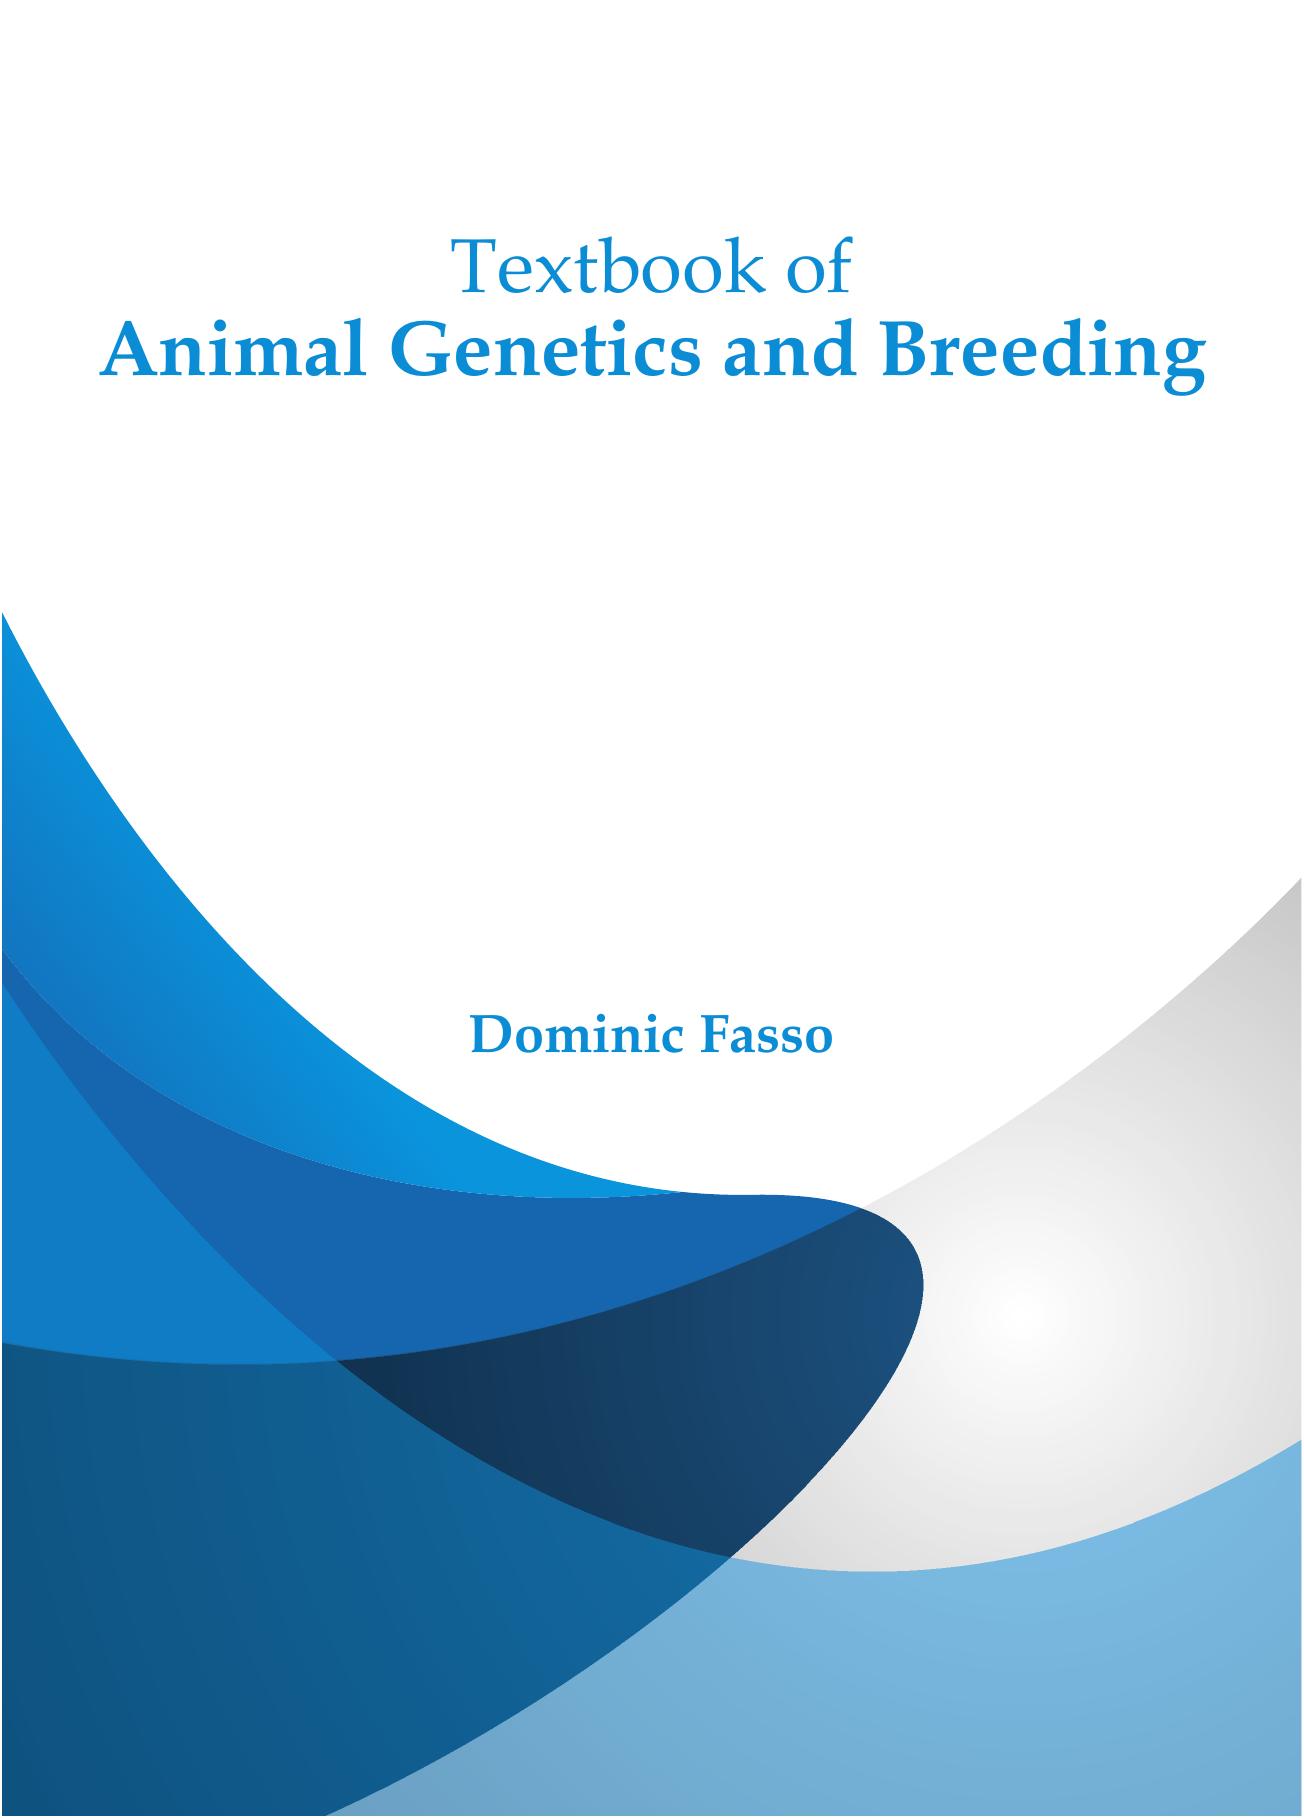 Animal Genetics and Breeding 2017